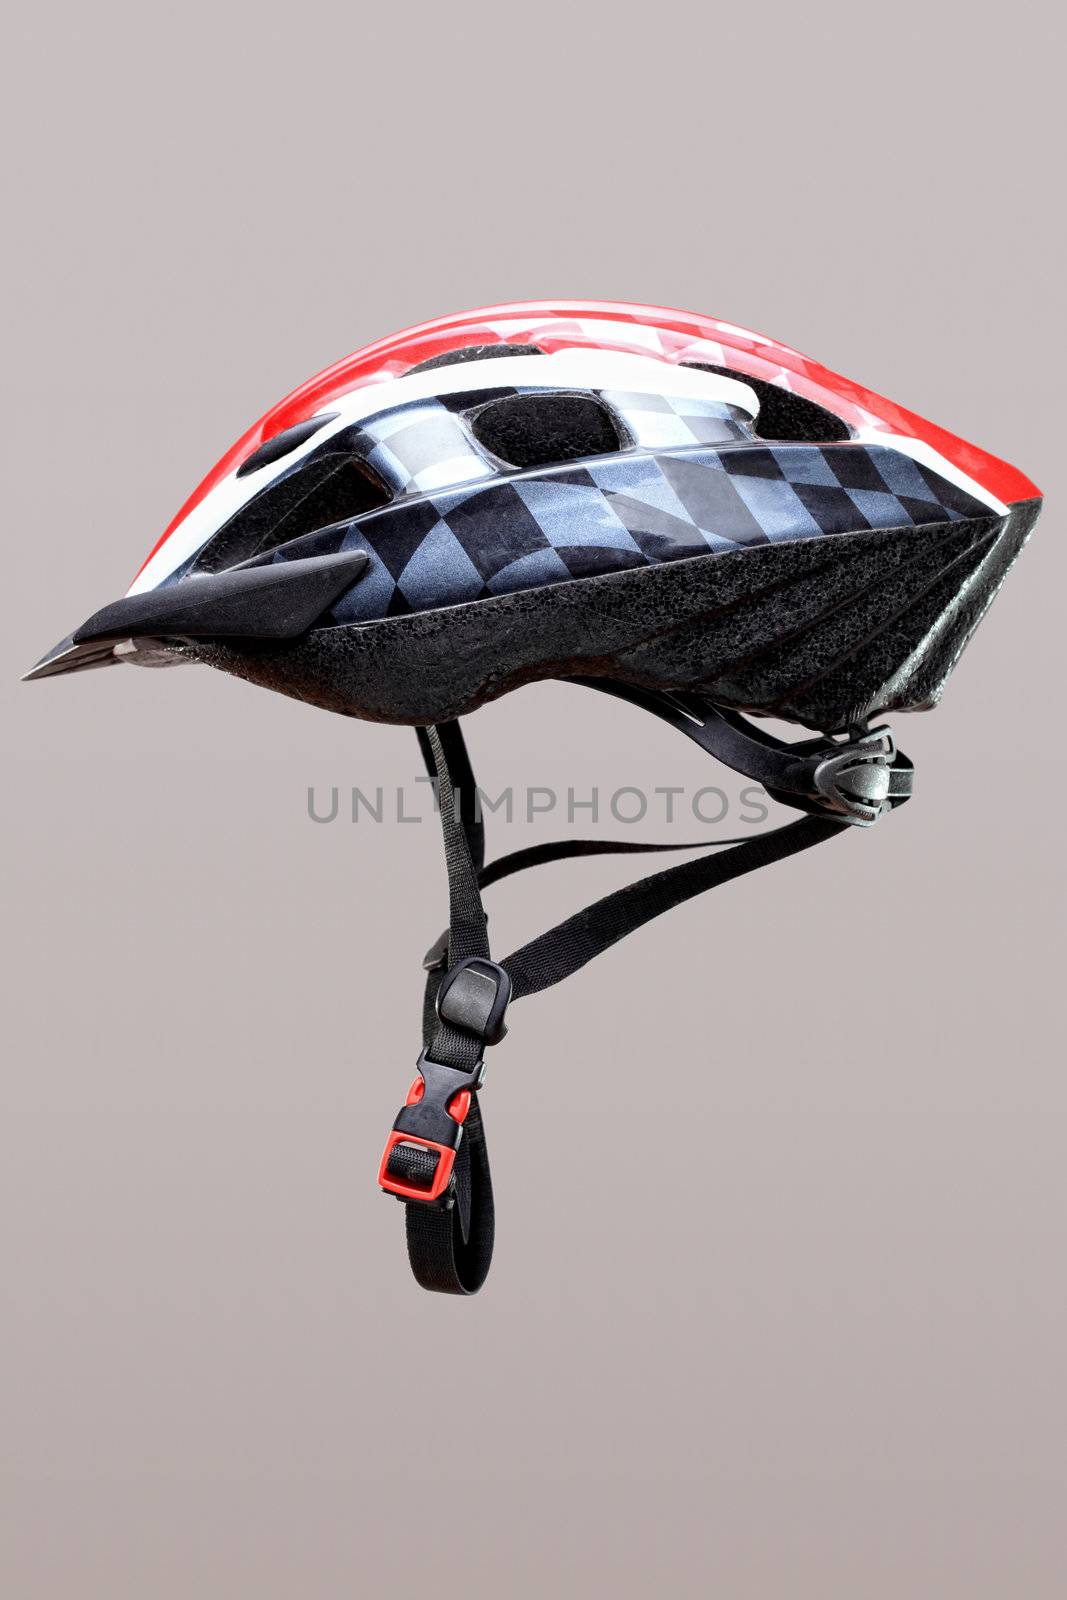 mountain bike helmet, floating on gray background